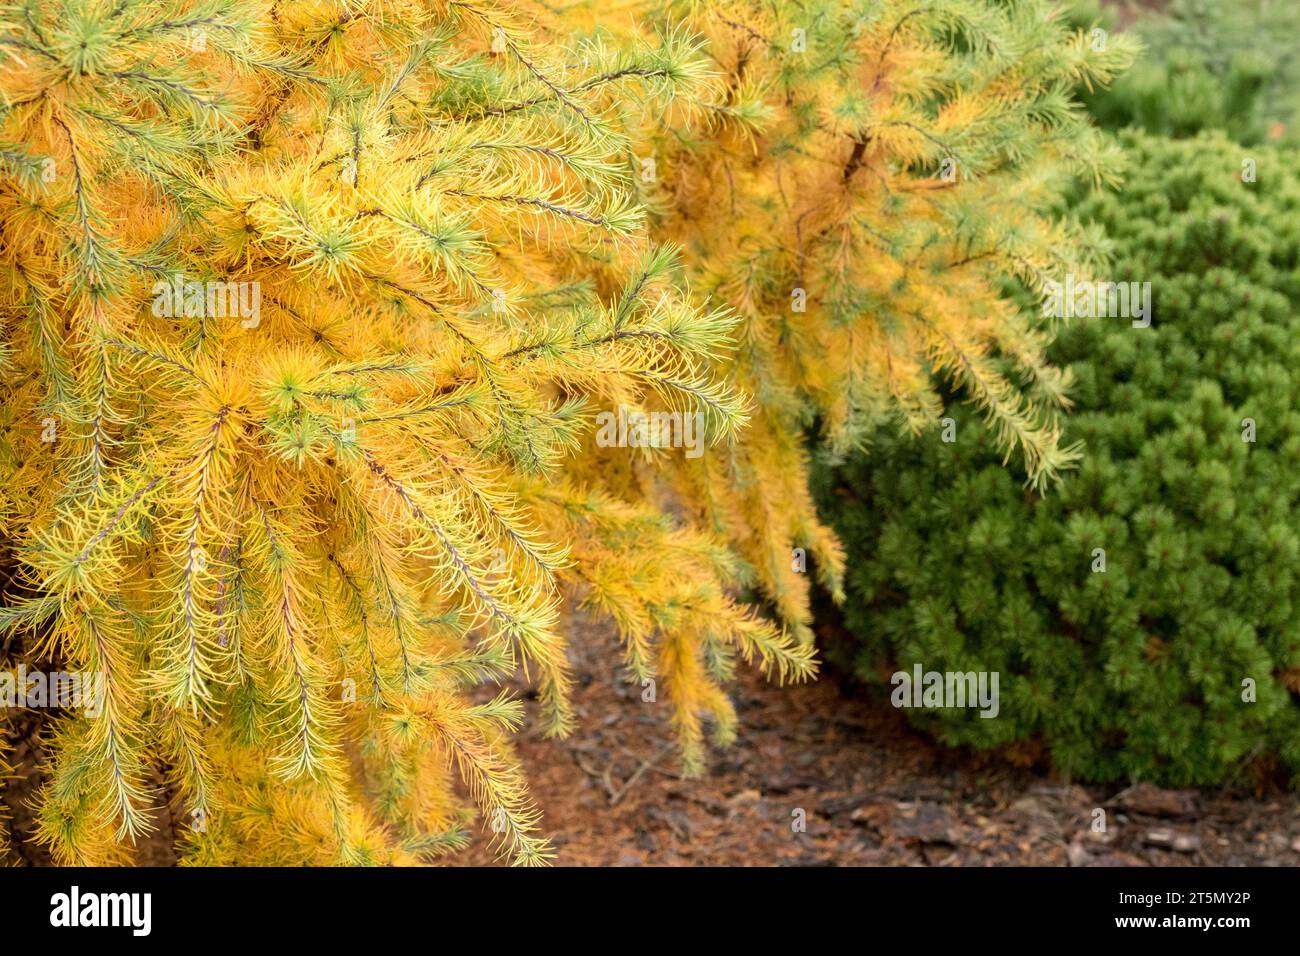 Larix, autumn, Foliage, autumnal, Japanese Larch, Larix kaempferi "Little Bogle", Conifer in garden Stock Photo